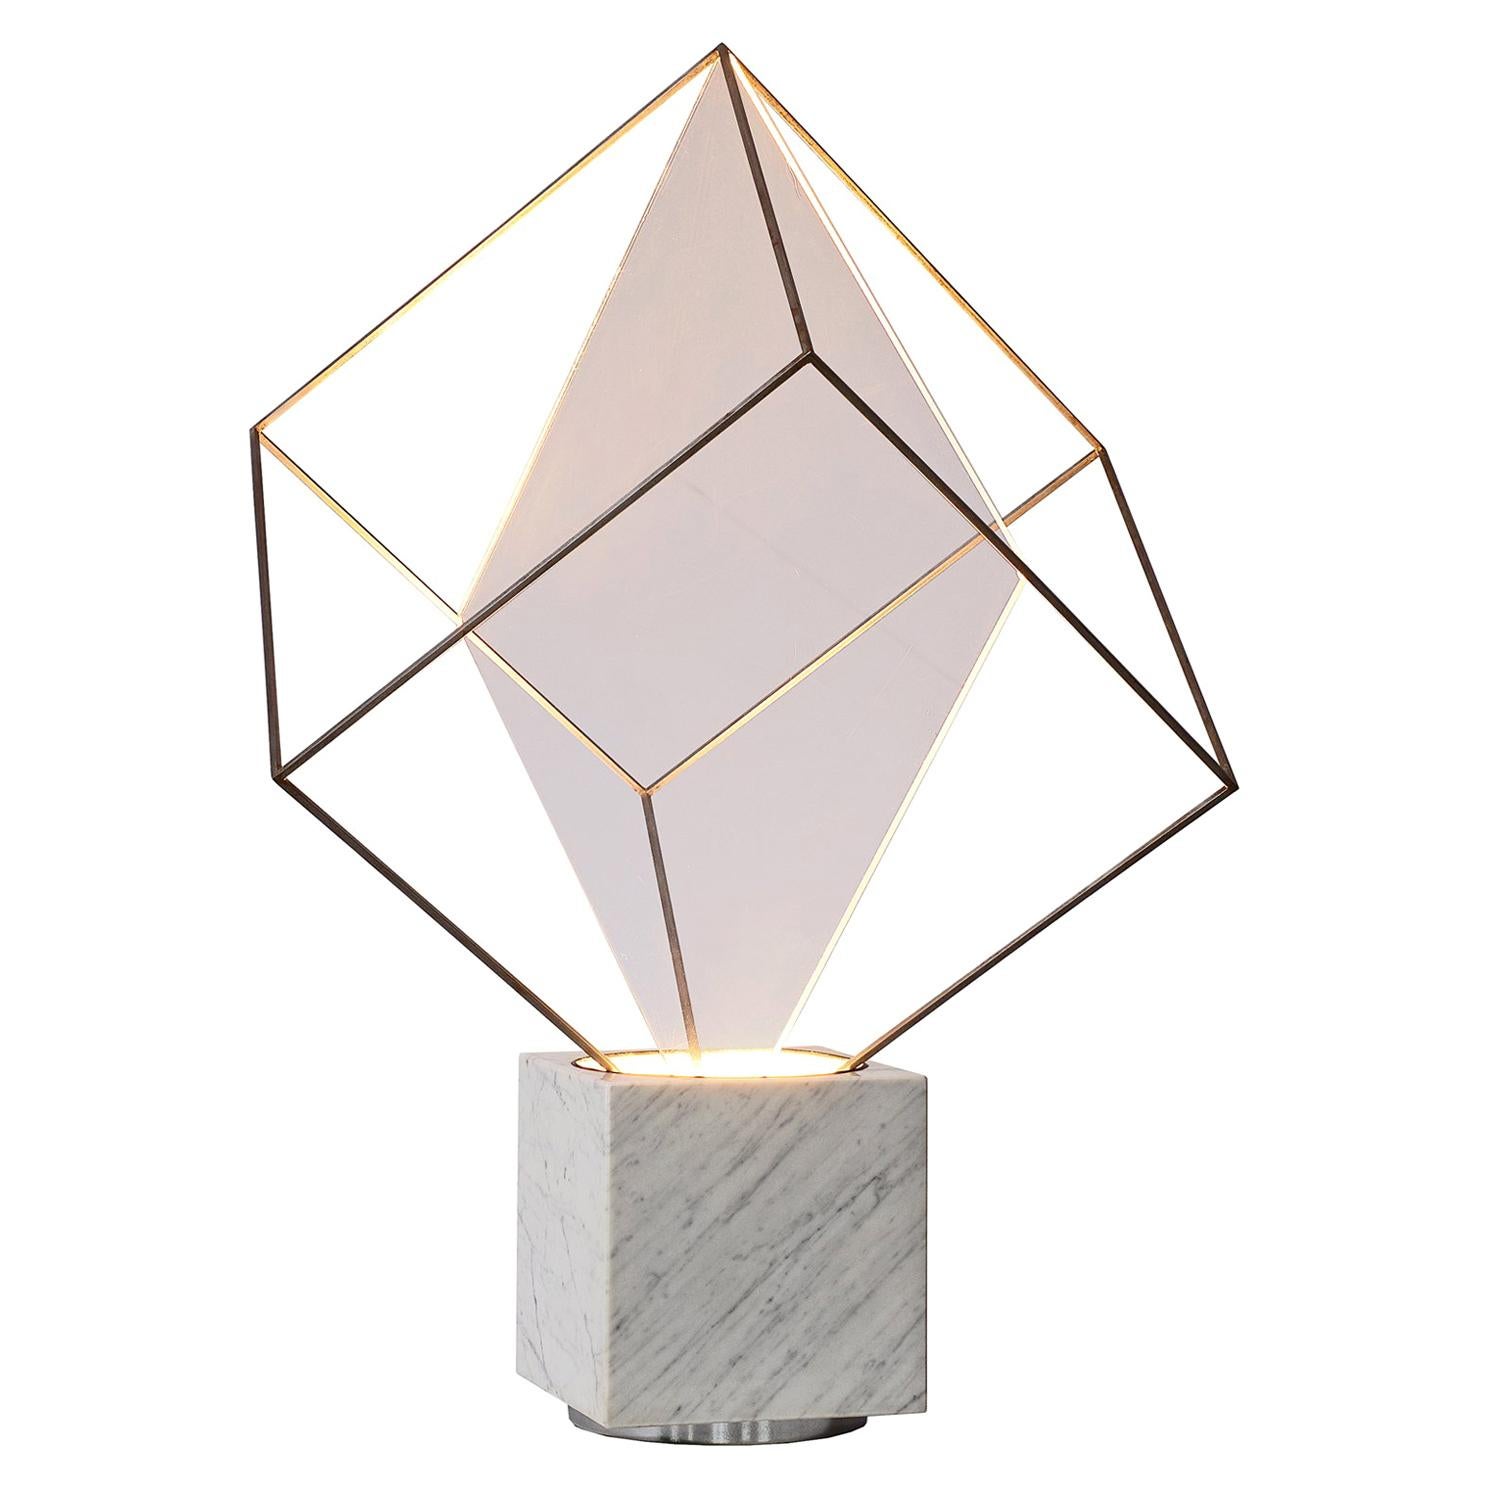 Claudio Salocchi for Lumen Form, 'Tulpa' Lamp, Marble, Acrylic, Chrome-Plated Me